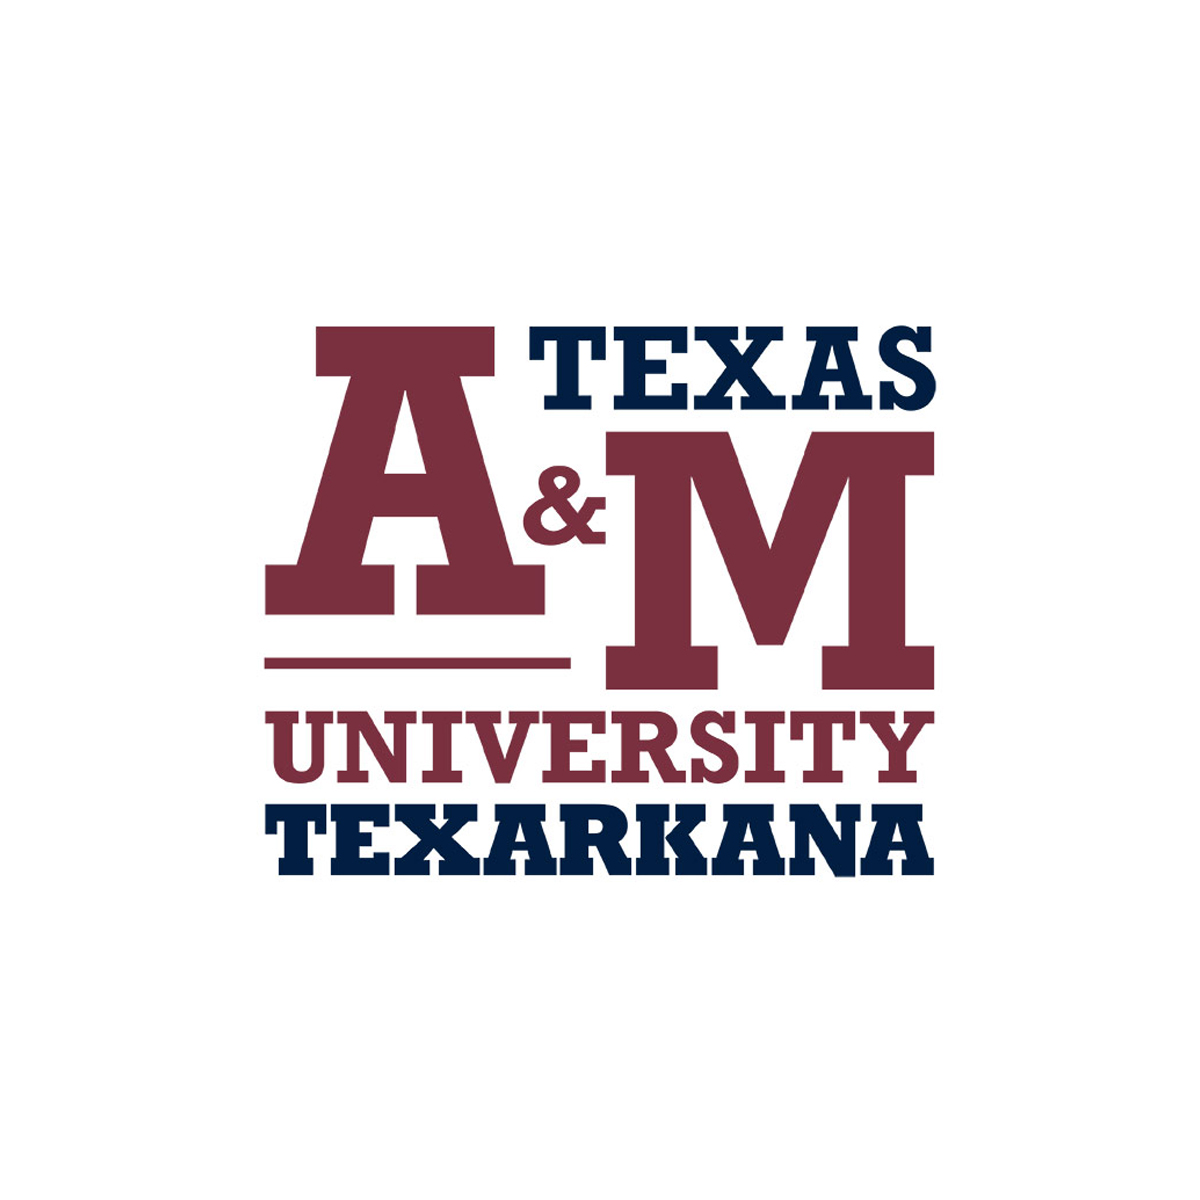 Texas A&M University - Texarkana featured logo